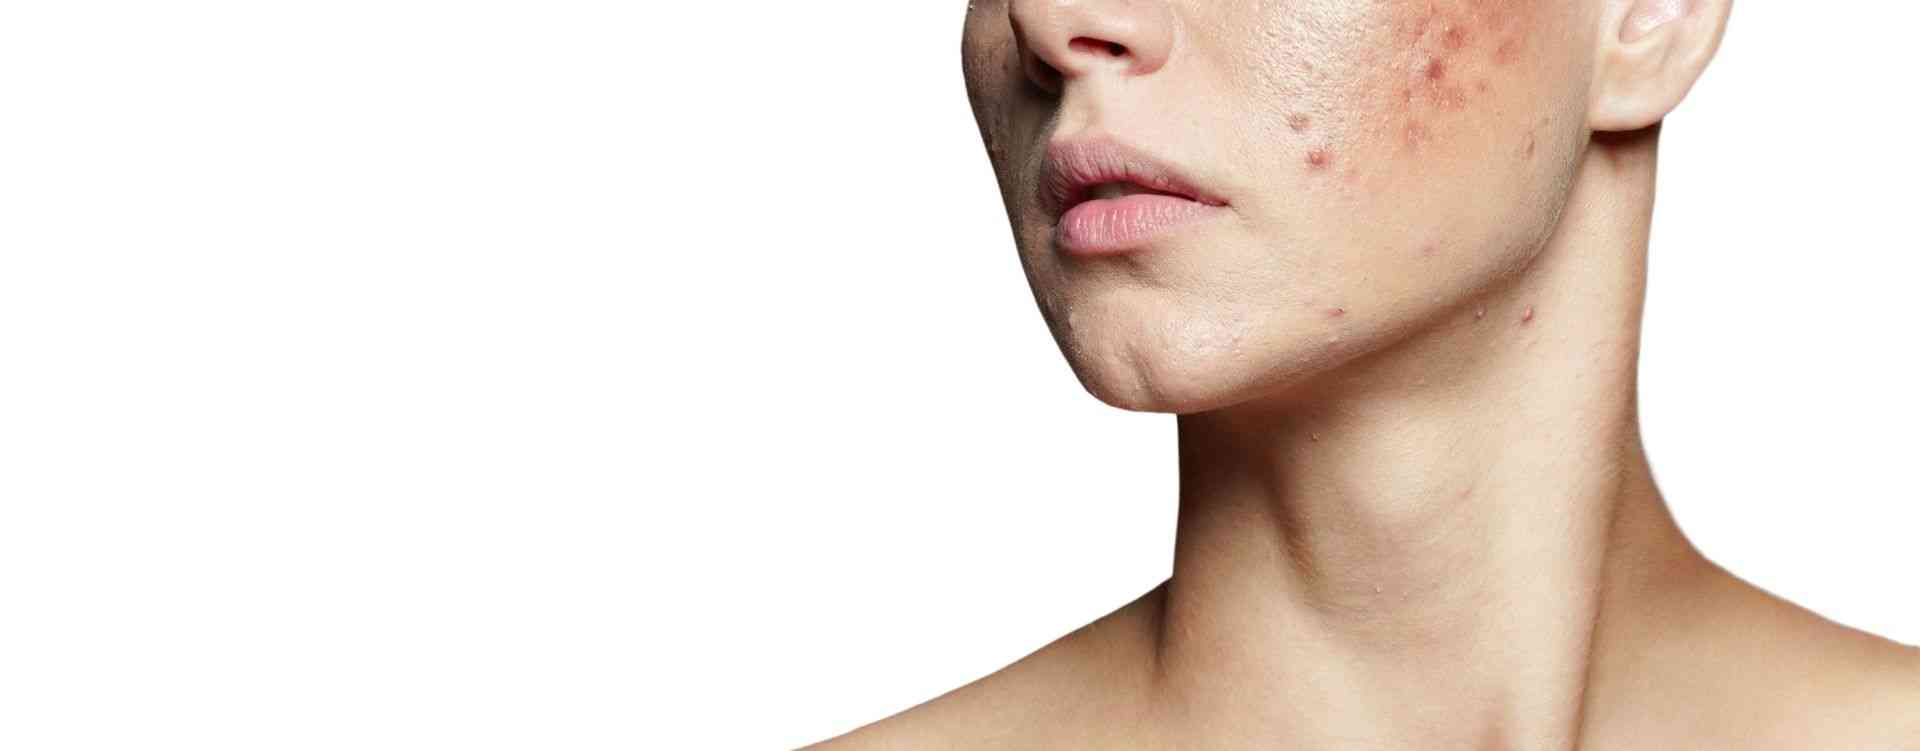 acne scars treatment london phi clinic